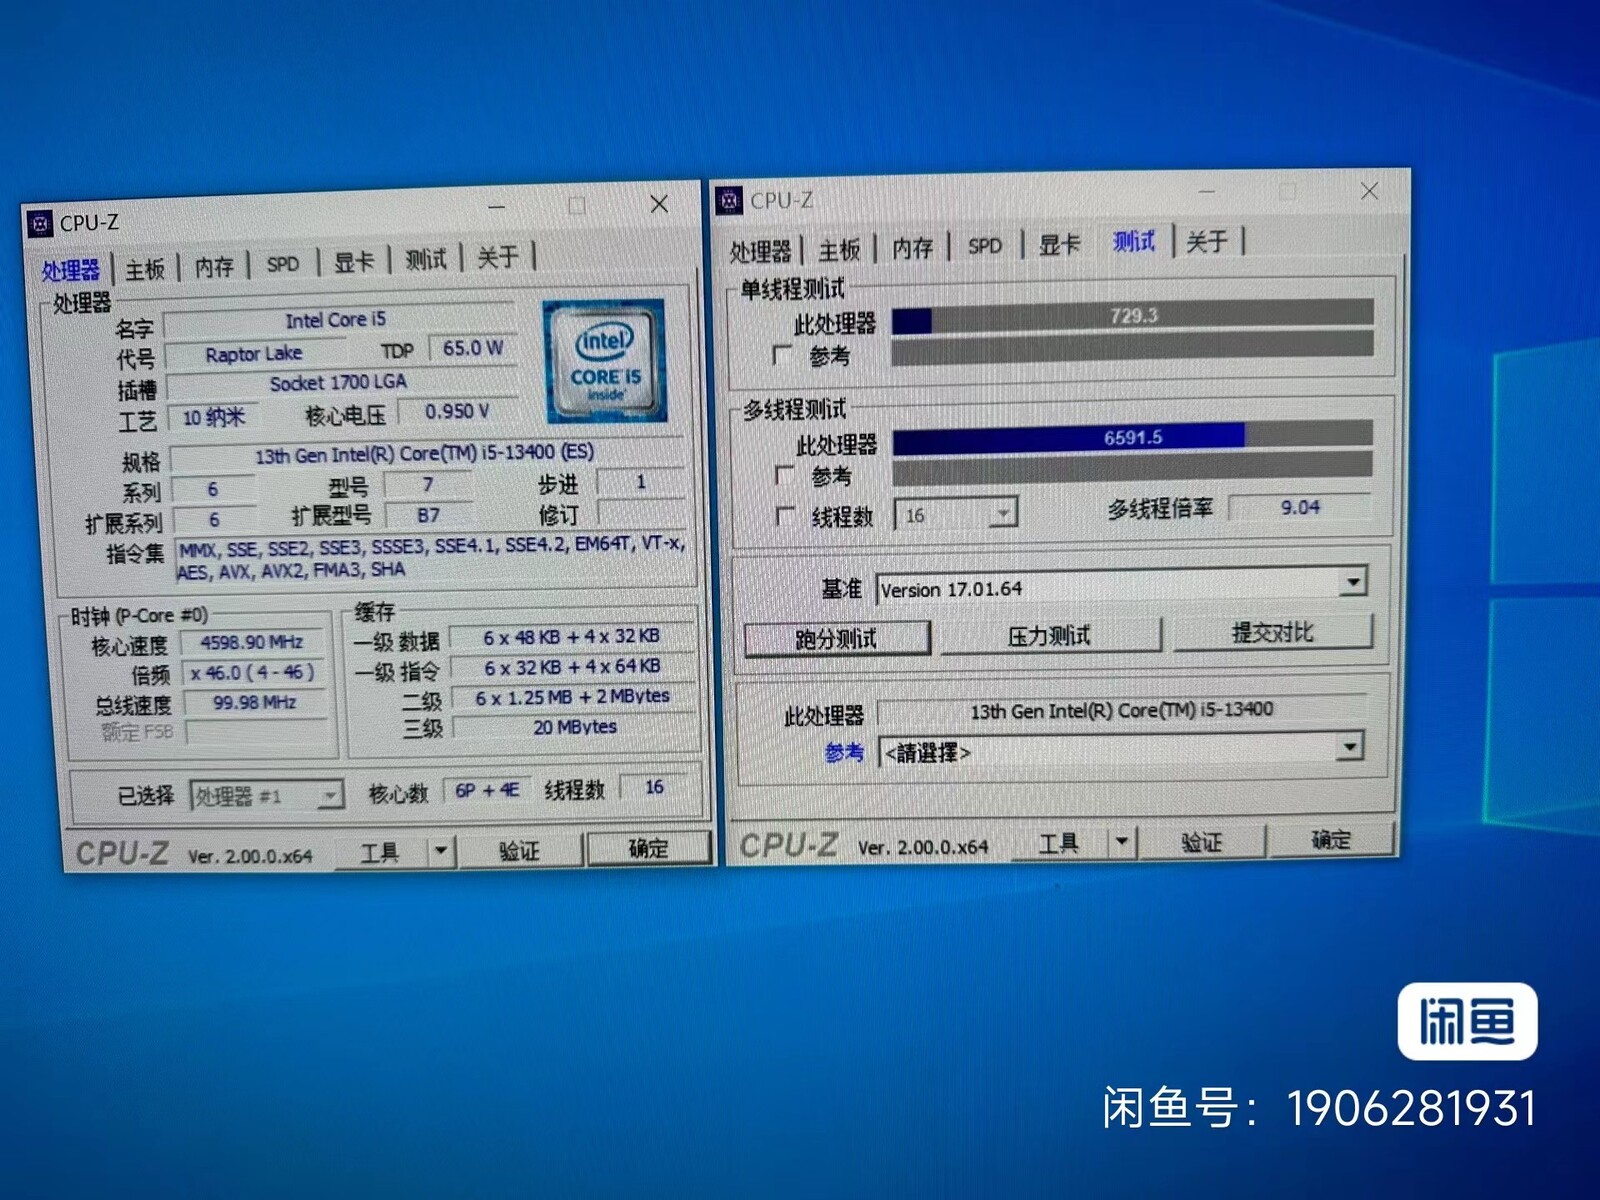 CPU Intel Core i5-13400 lộ diện trong CPU-Z, ảnh: HXL